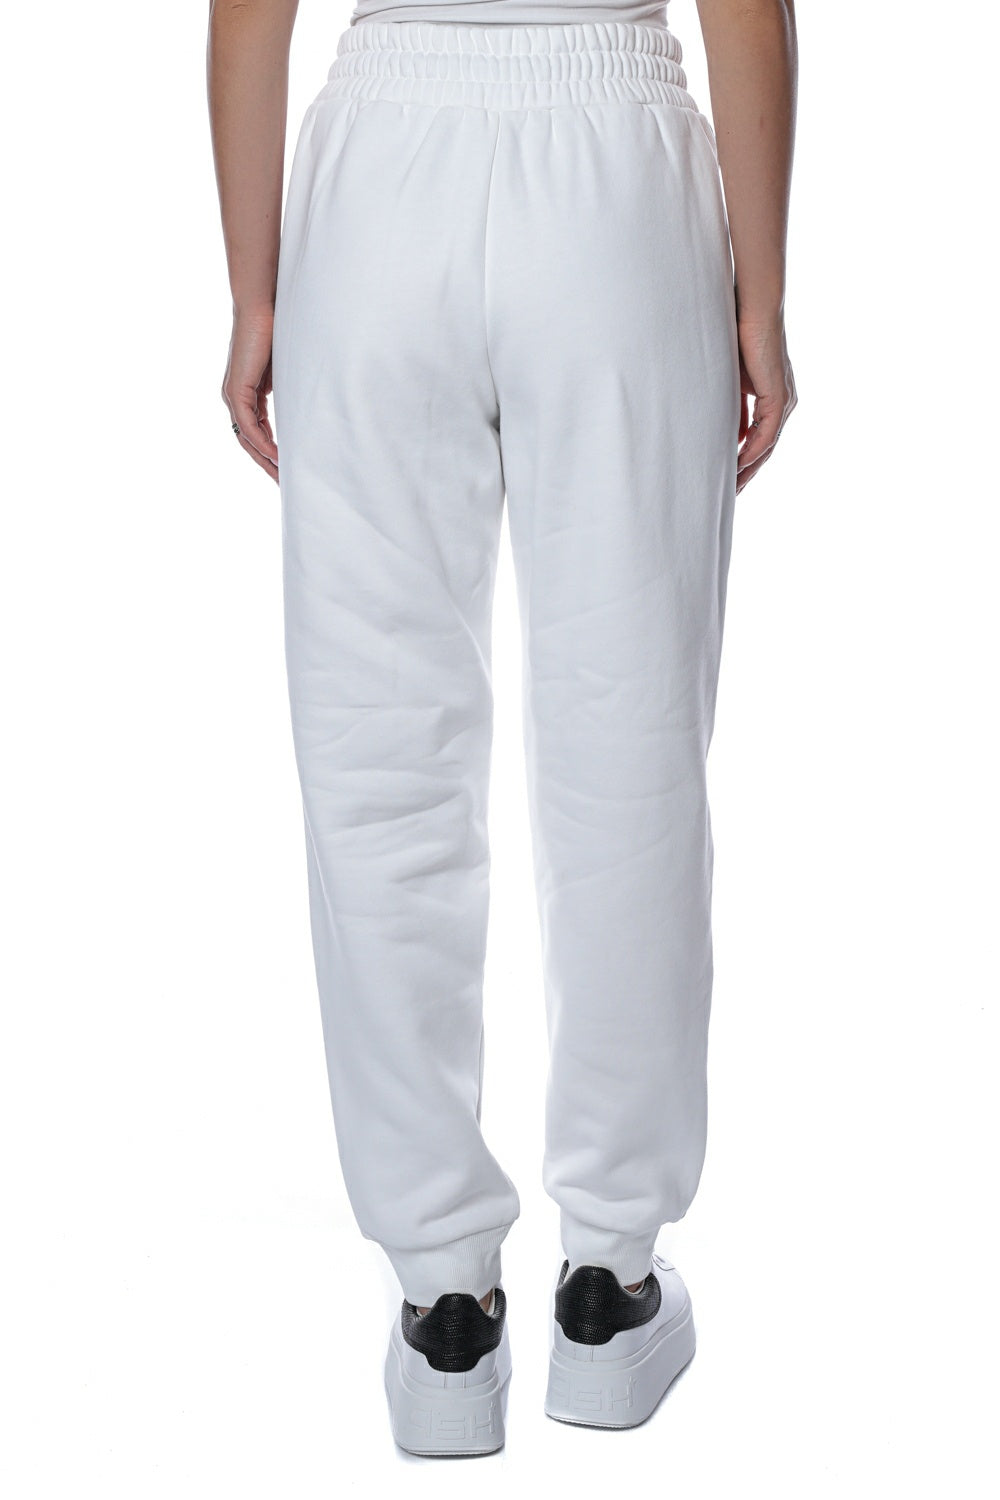 Pantaloni sport Michael Kors cu vipusca contrastanta